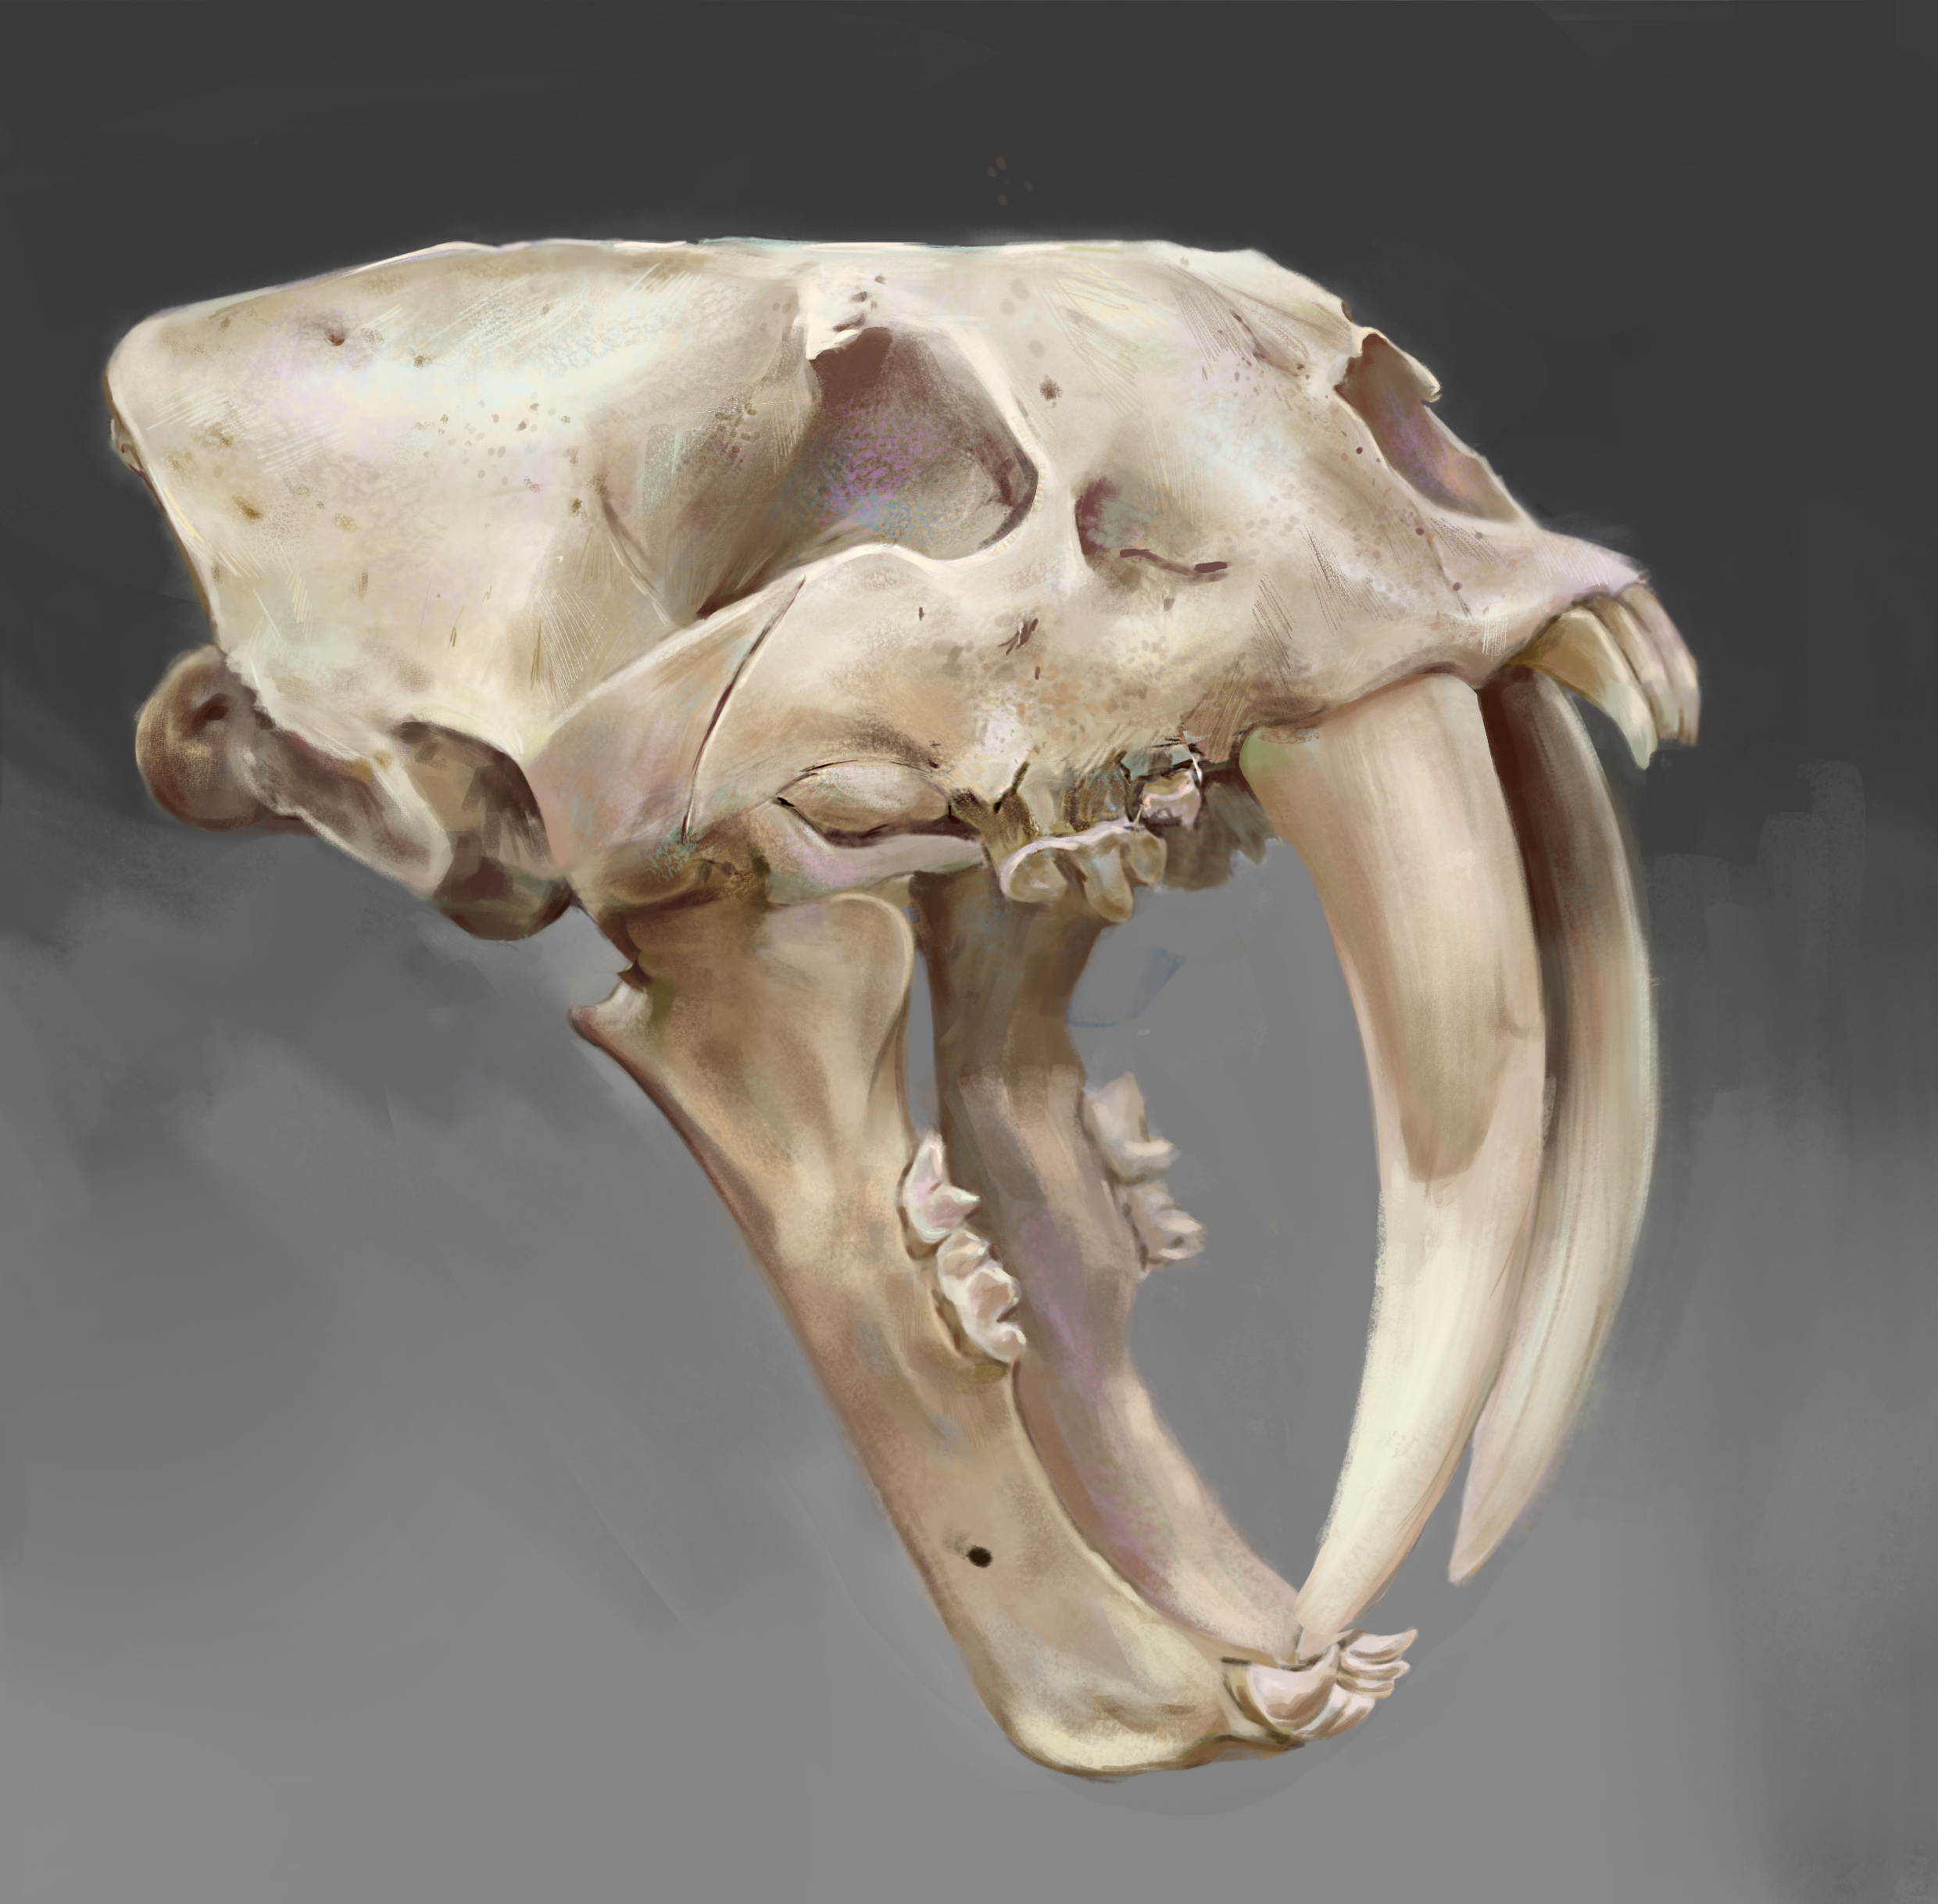 skull骷髅头骨图片素材-编号07959447-图行天下